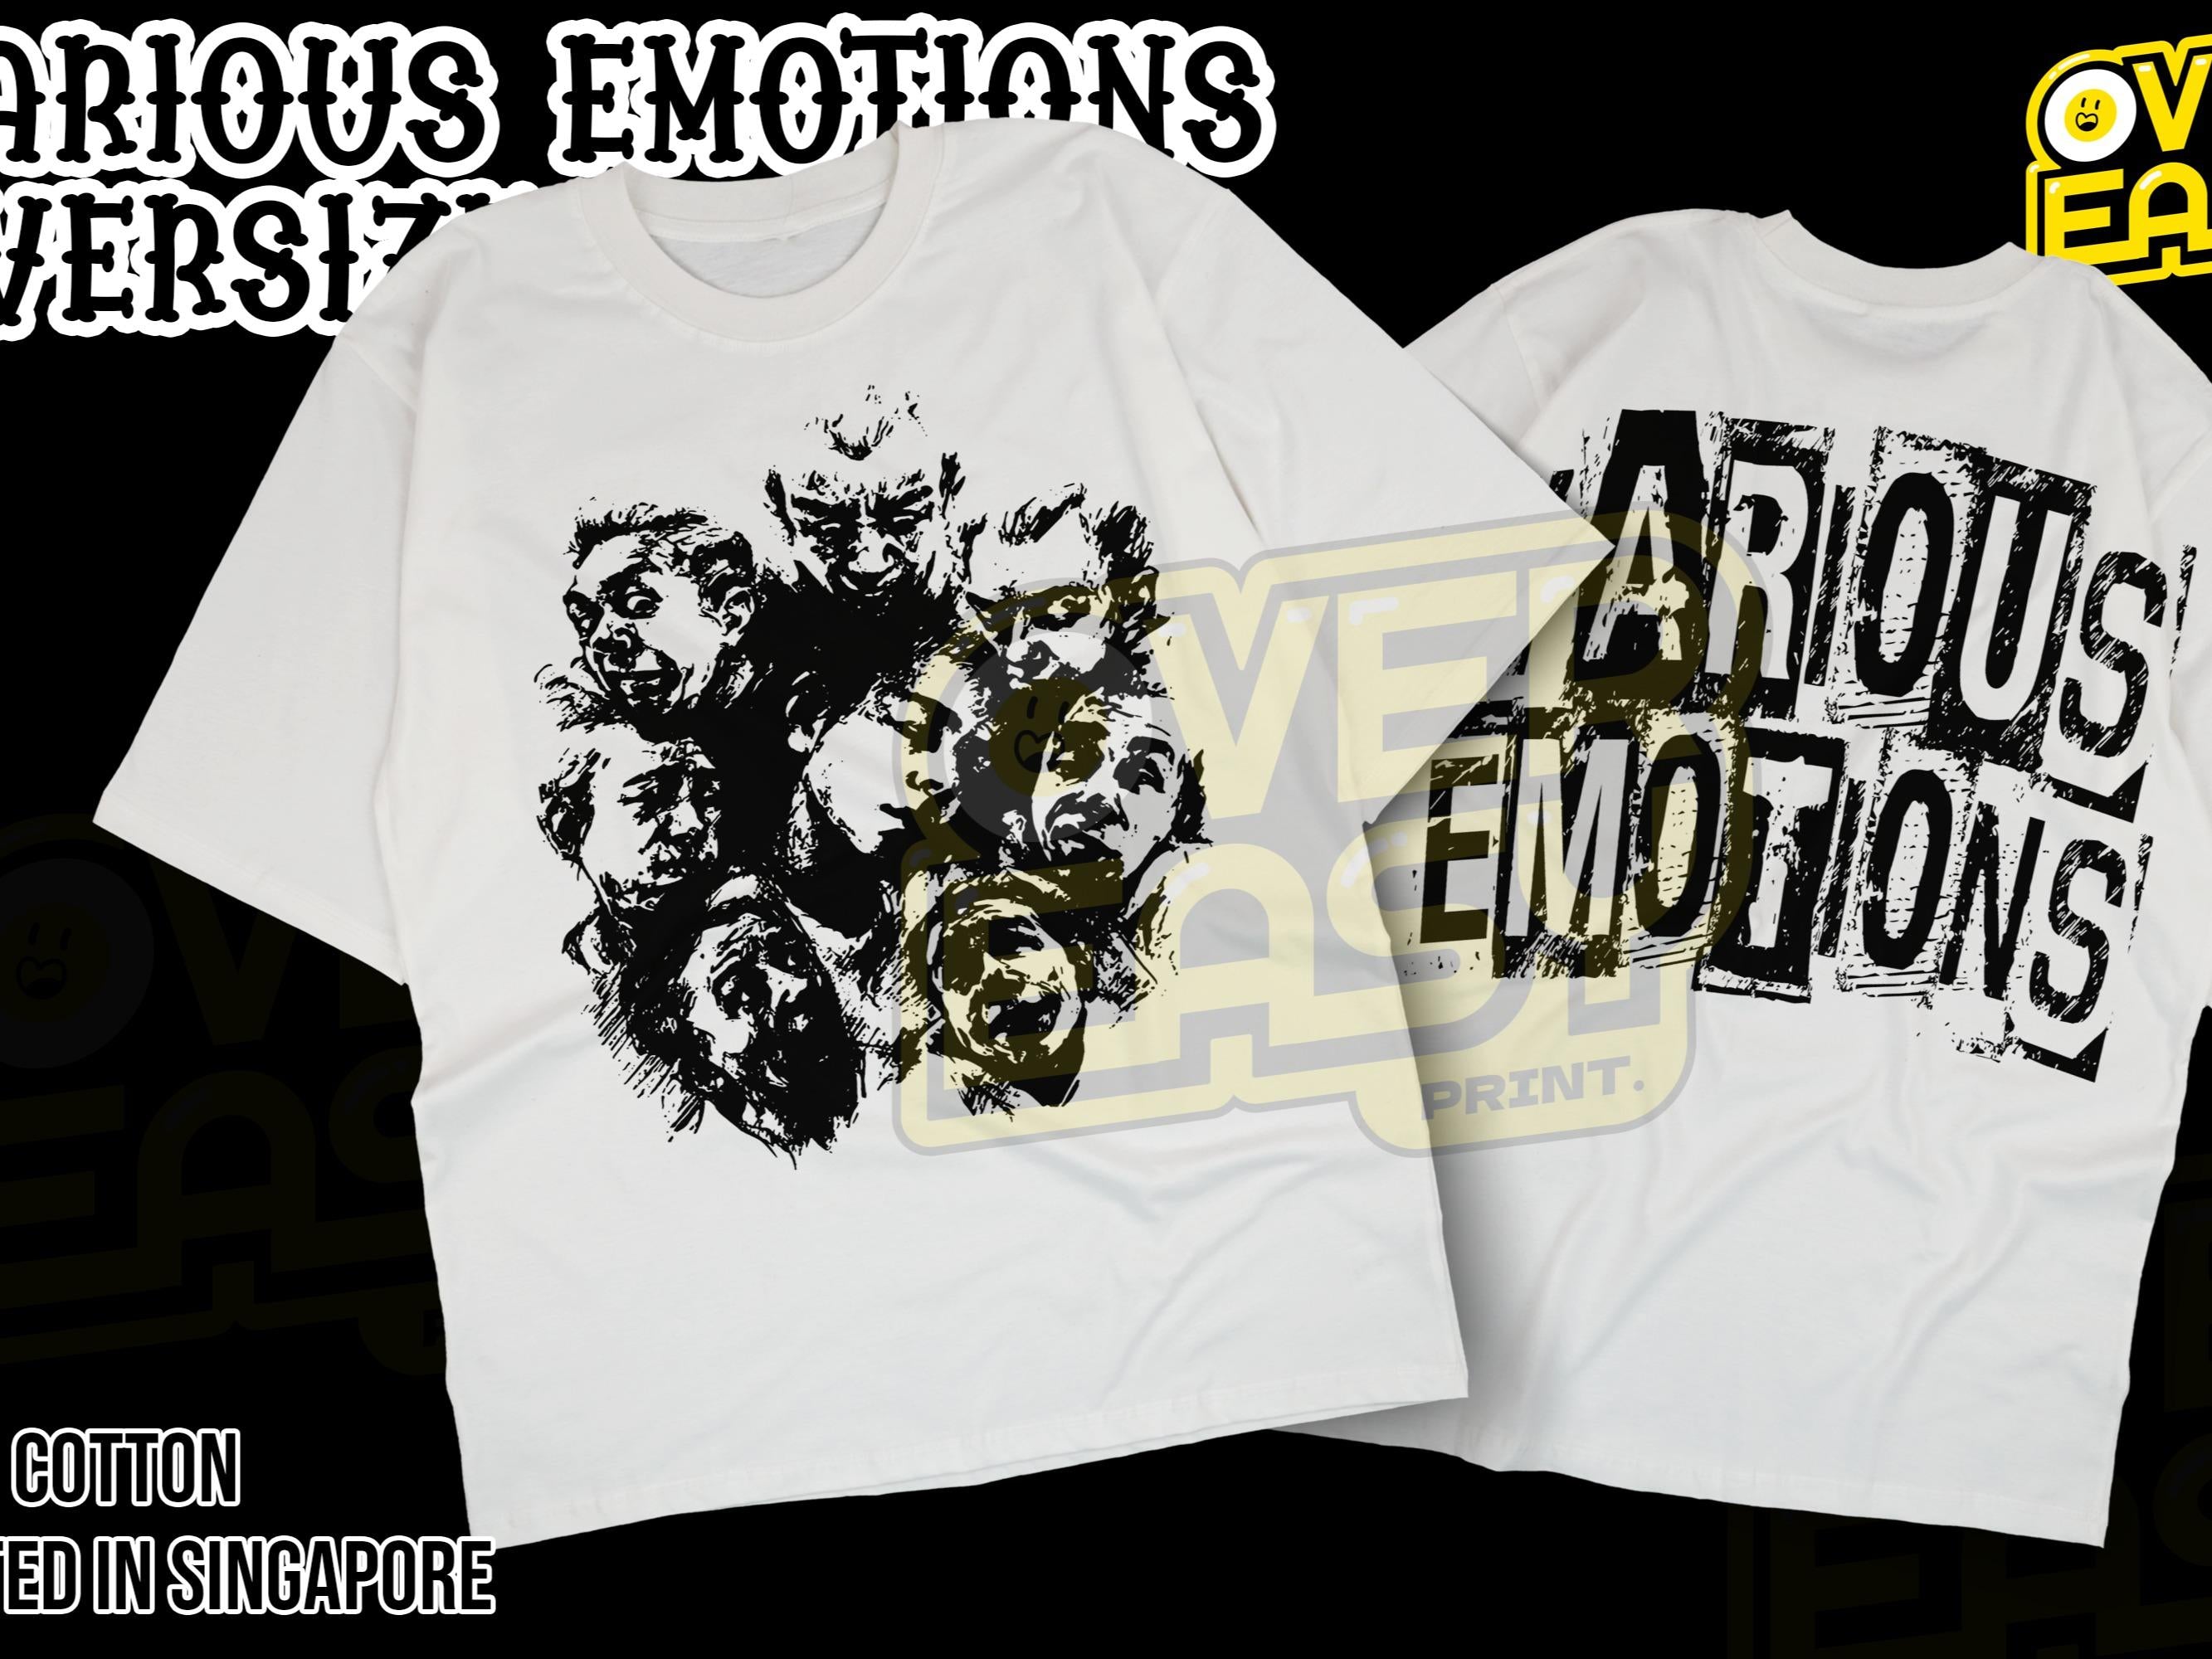 Various Emotions T-Shirt